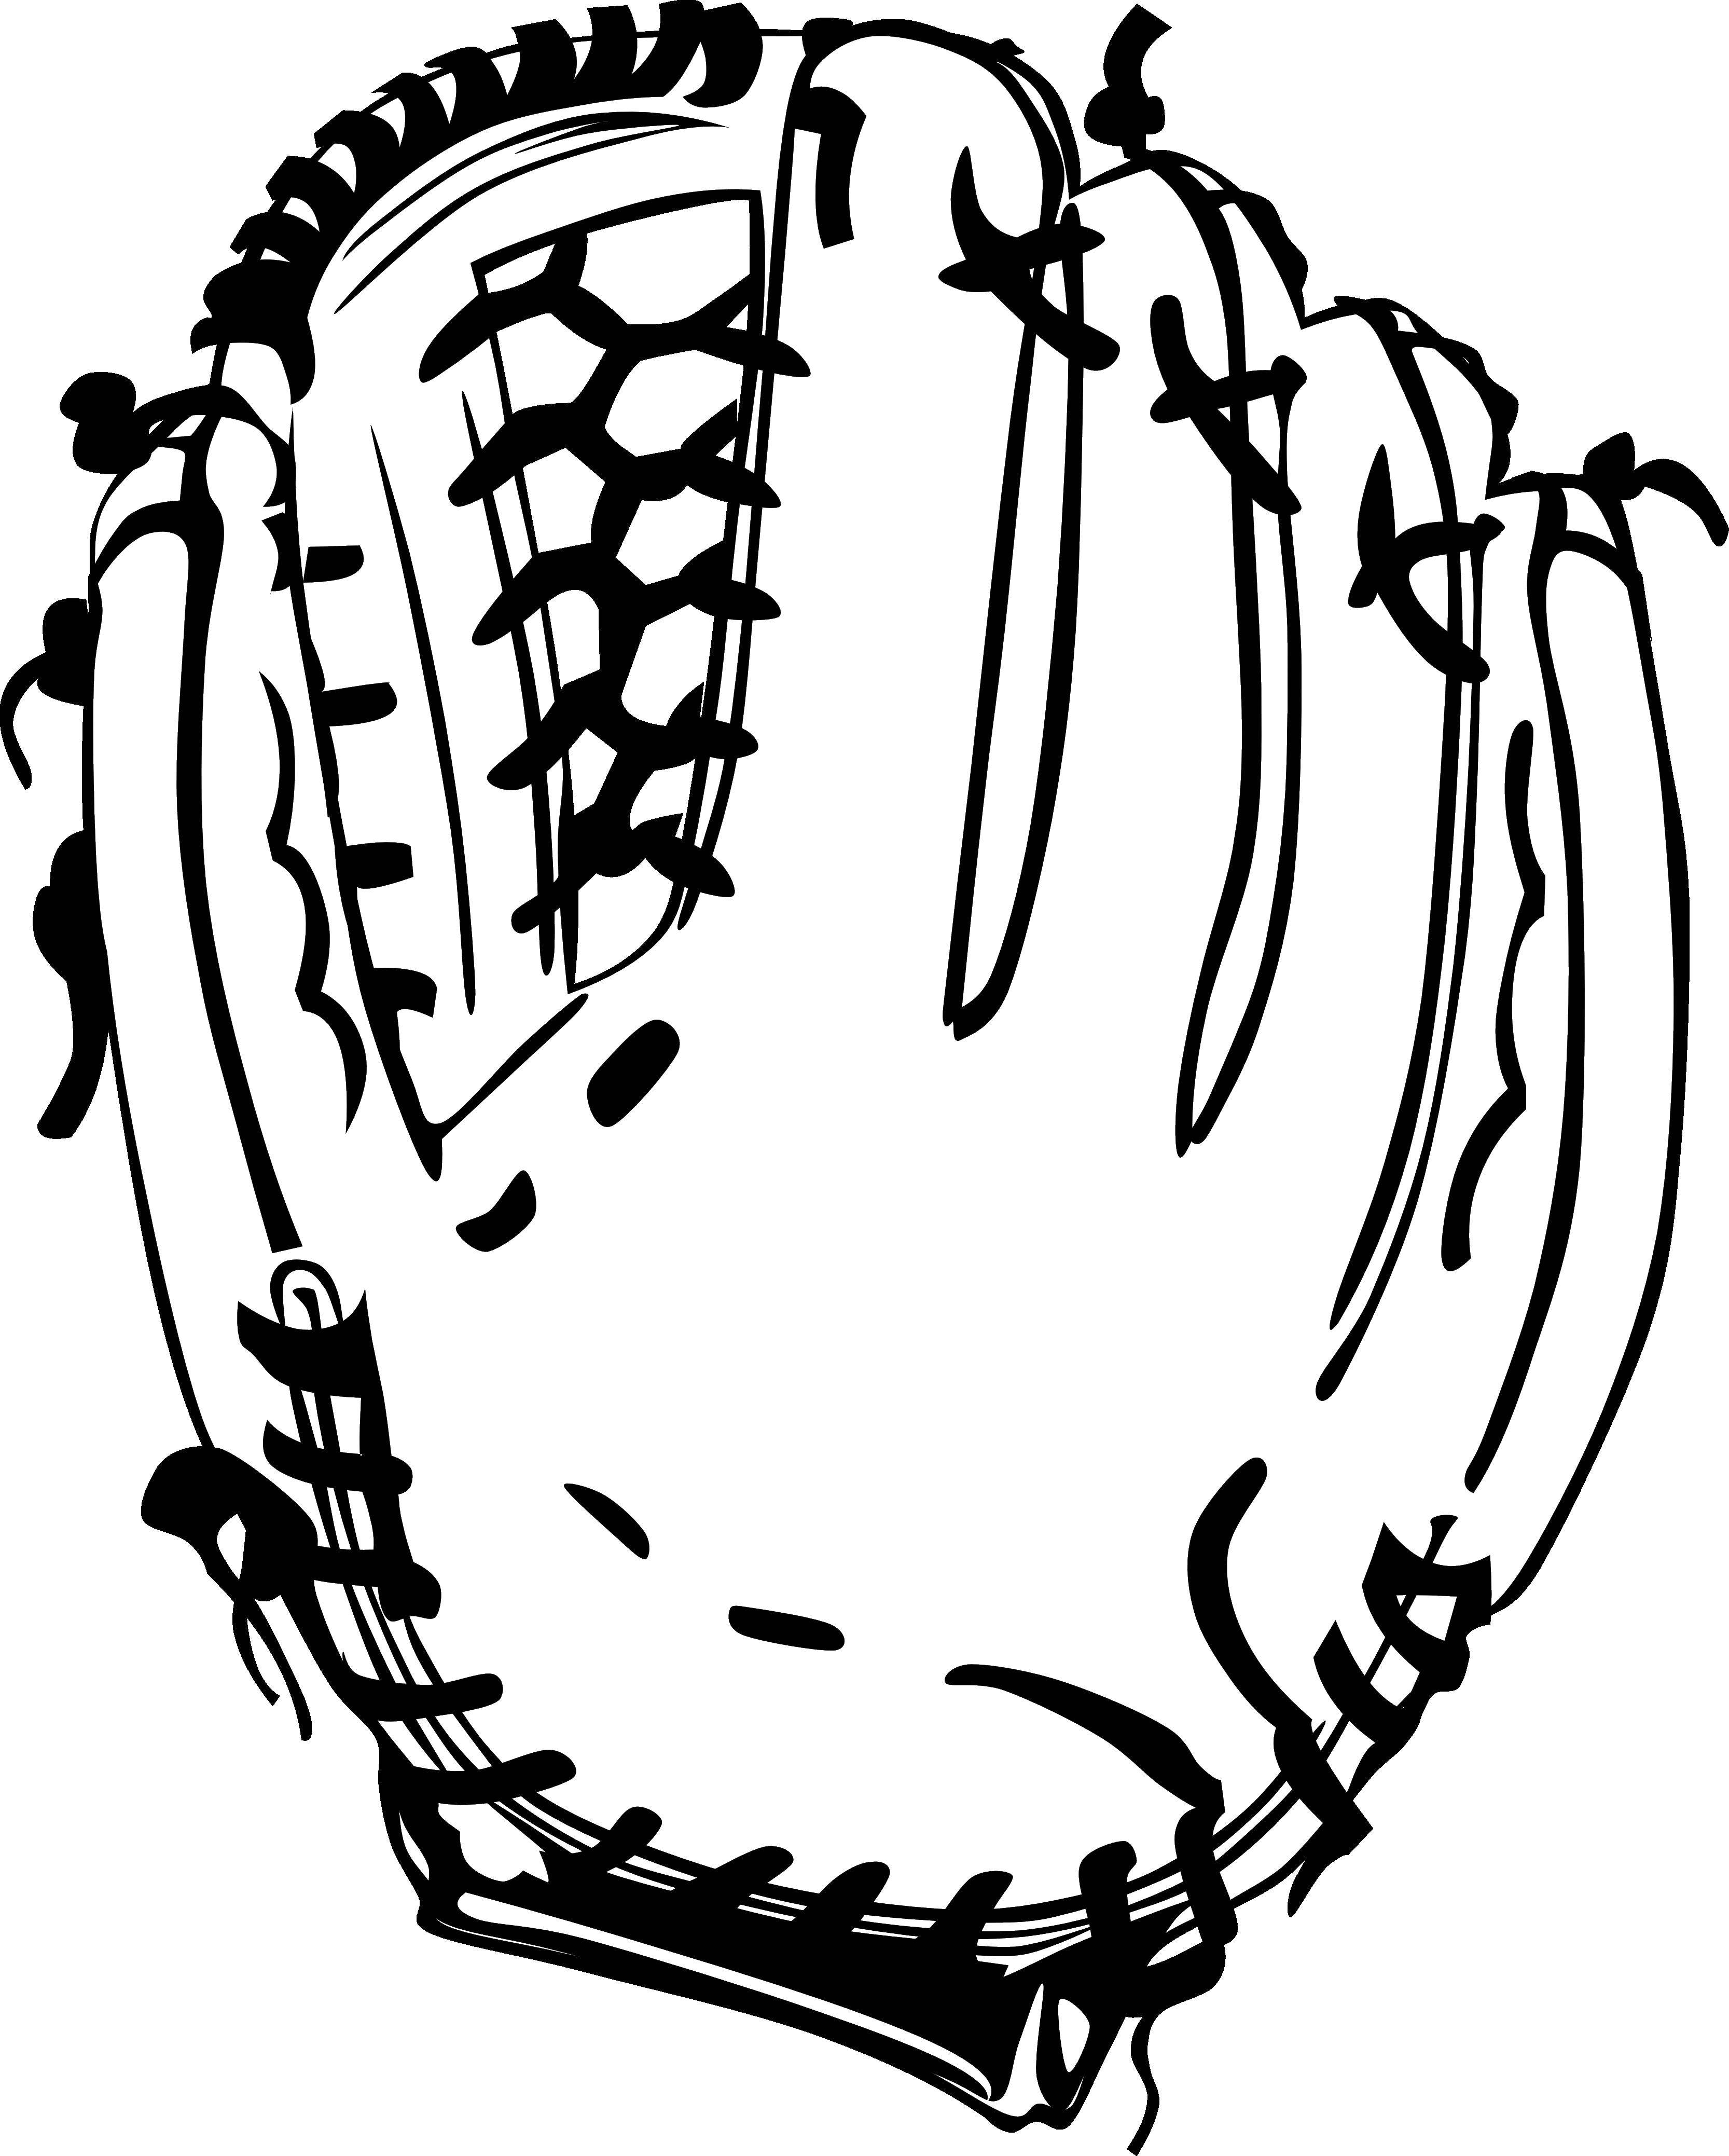 Coloring Baseball glove. Category sports. Tags:  sports, baseball, glove.